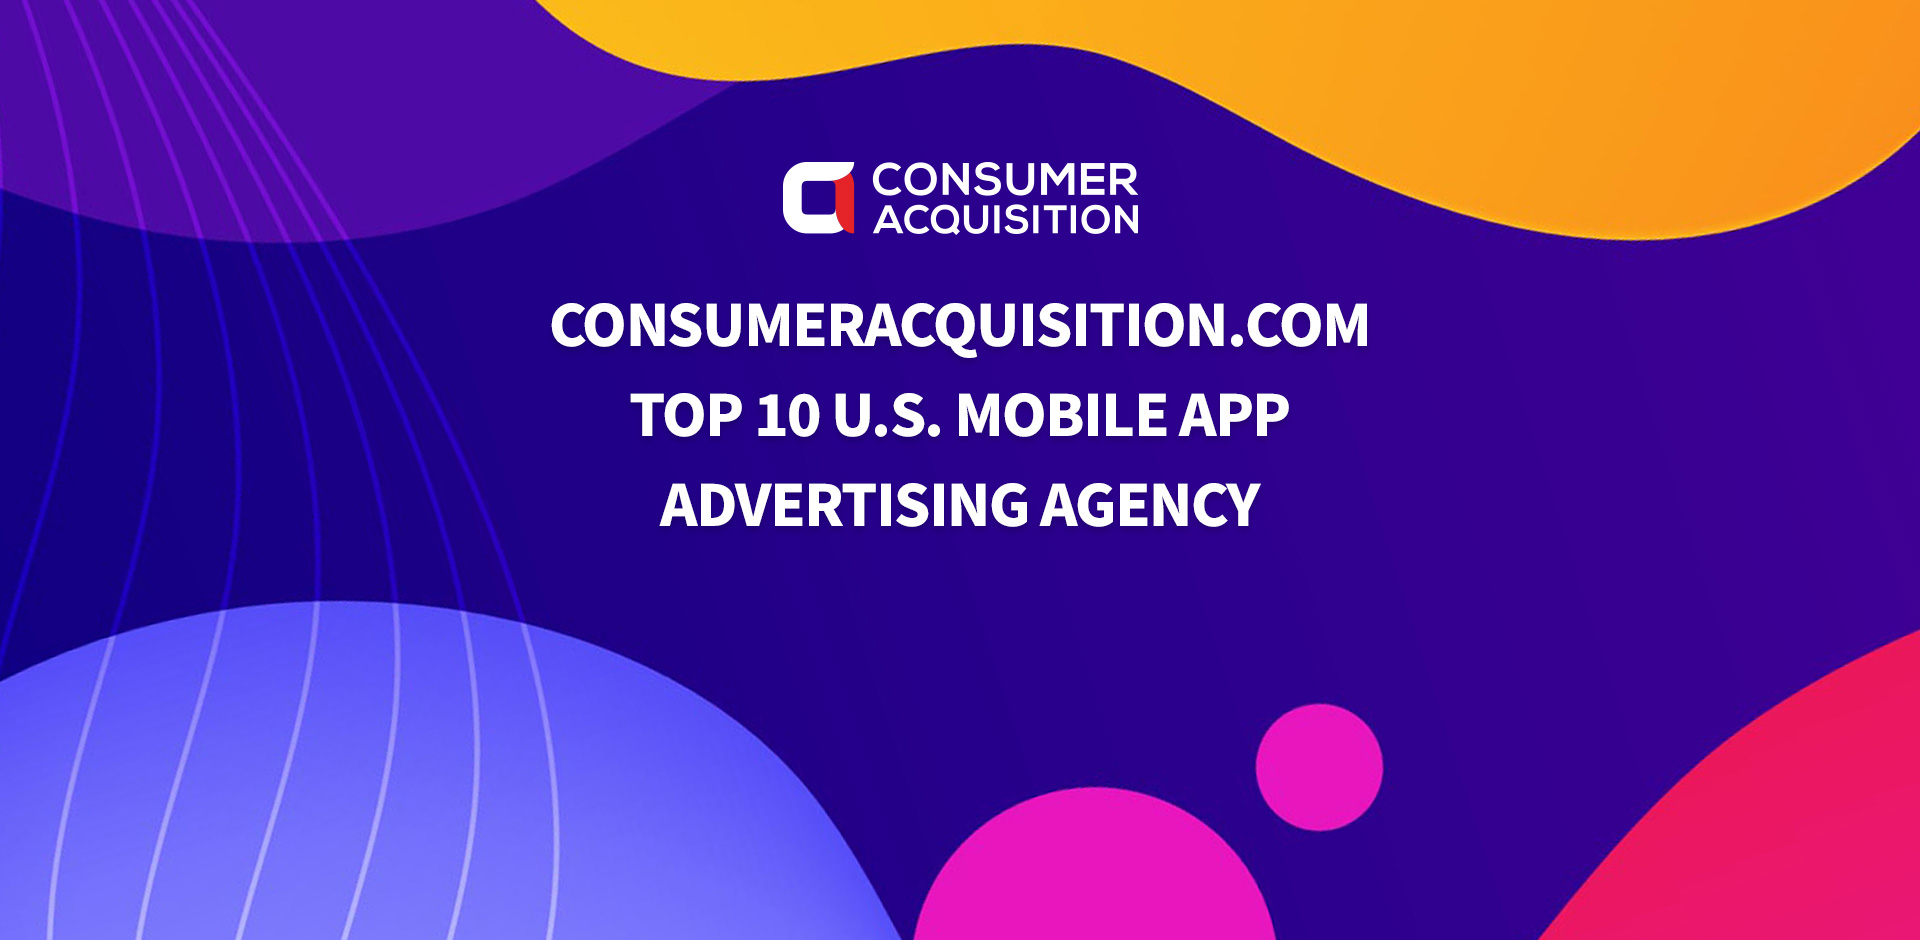 ConsumerAcquisition.com Top 10 U.S. Mobile App Advertising Agency